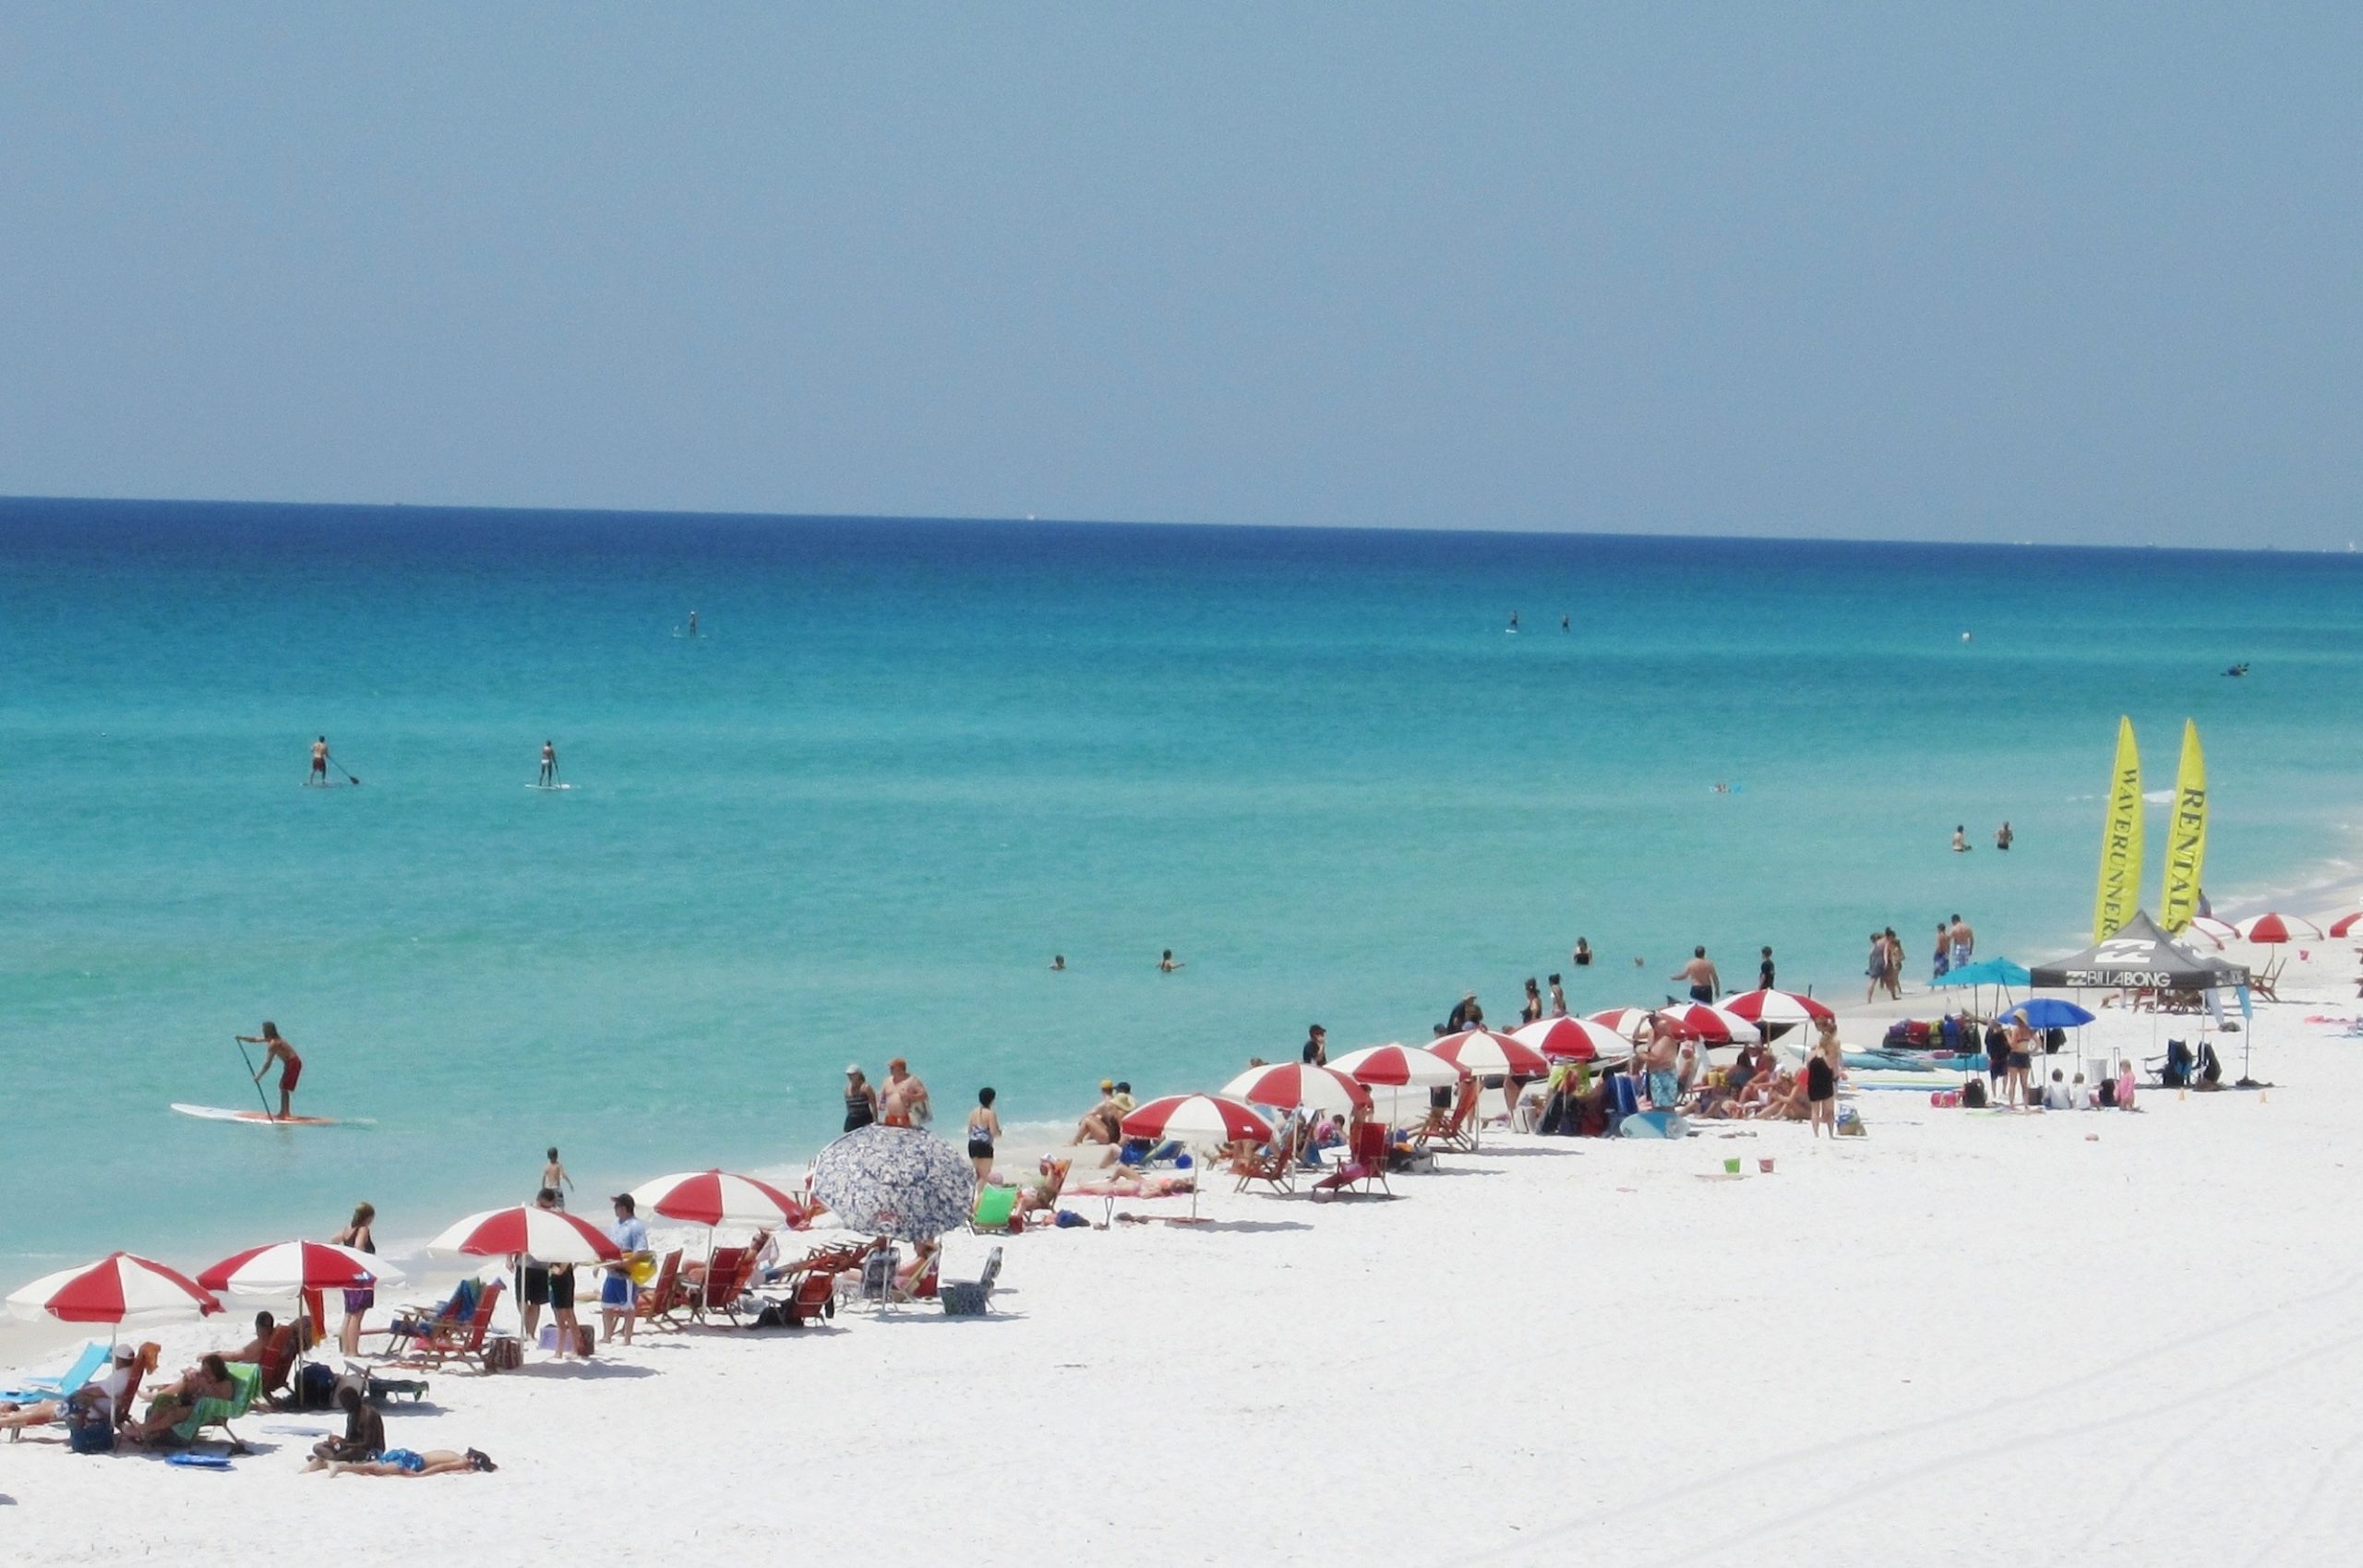 Sandpiper Cove Resort Holiday Isle Destin Florida Beach Vacations by Sunset Resort Rentals